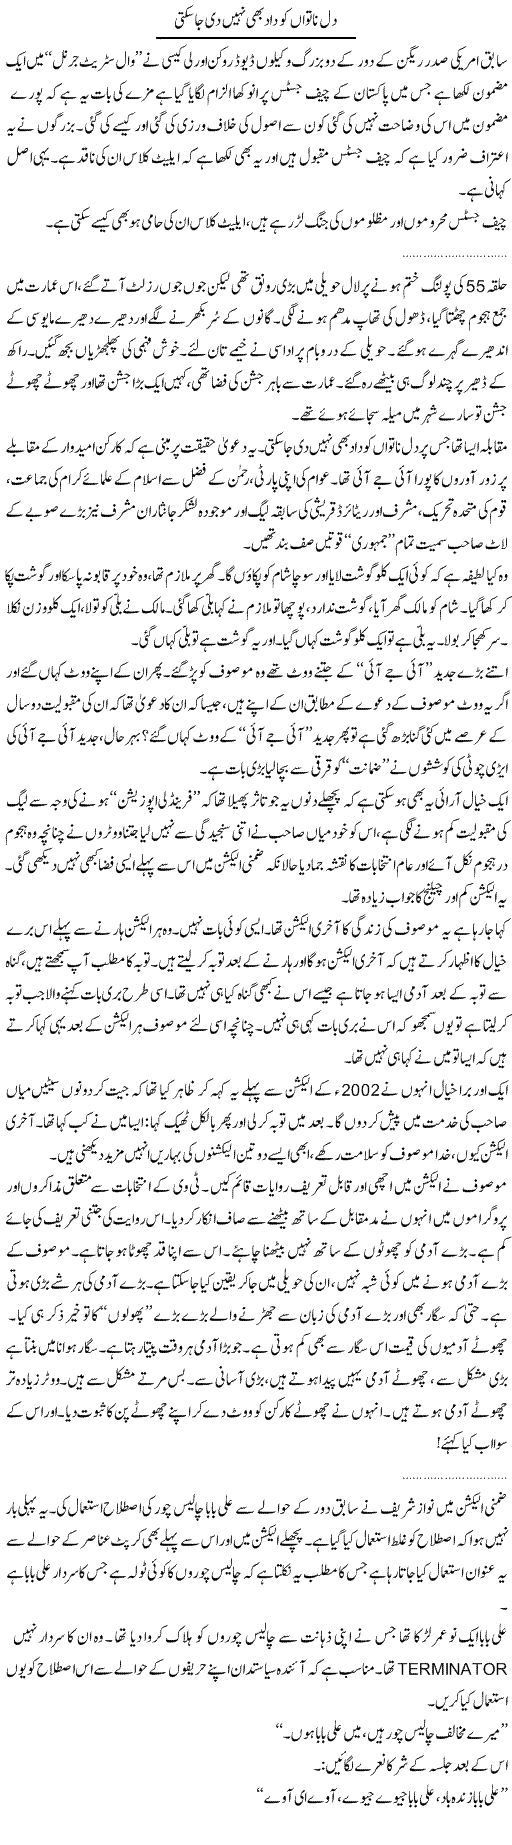 Dil natvan Express Column Abdullah Tariq 26 Feb 2010